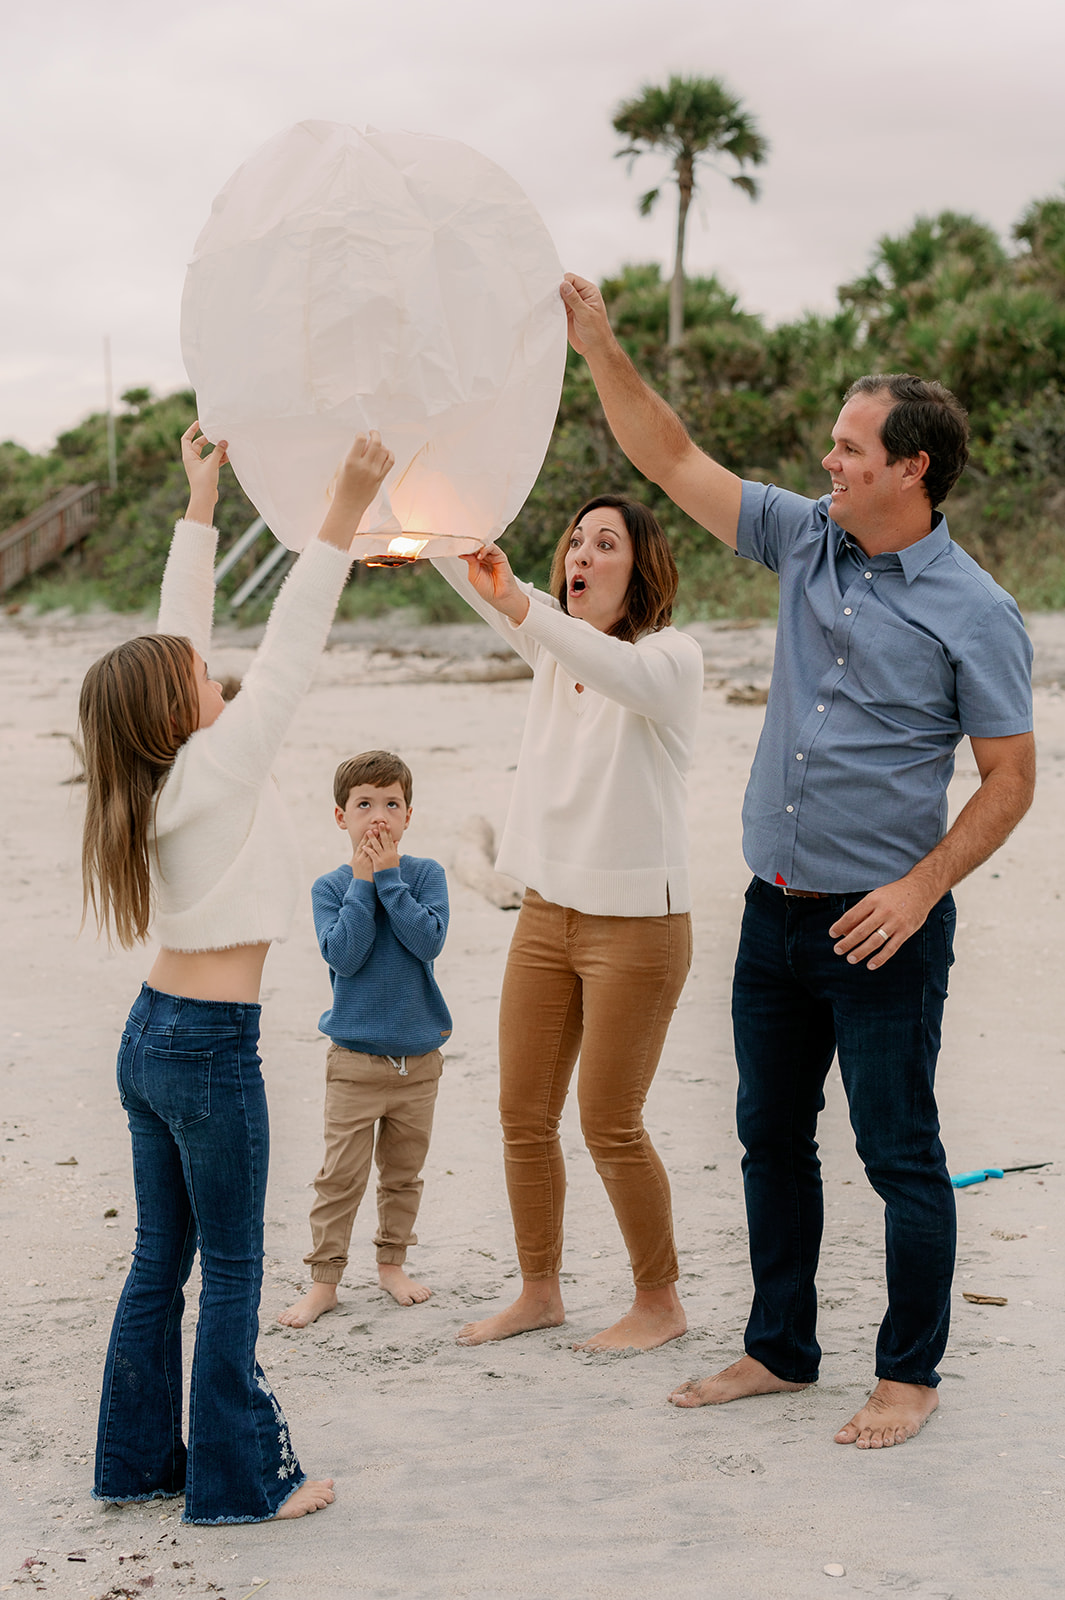 Rainy beach day family photoshoot on Manasota Key in Englewood, Florida